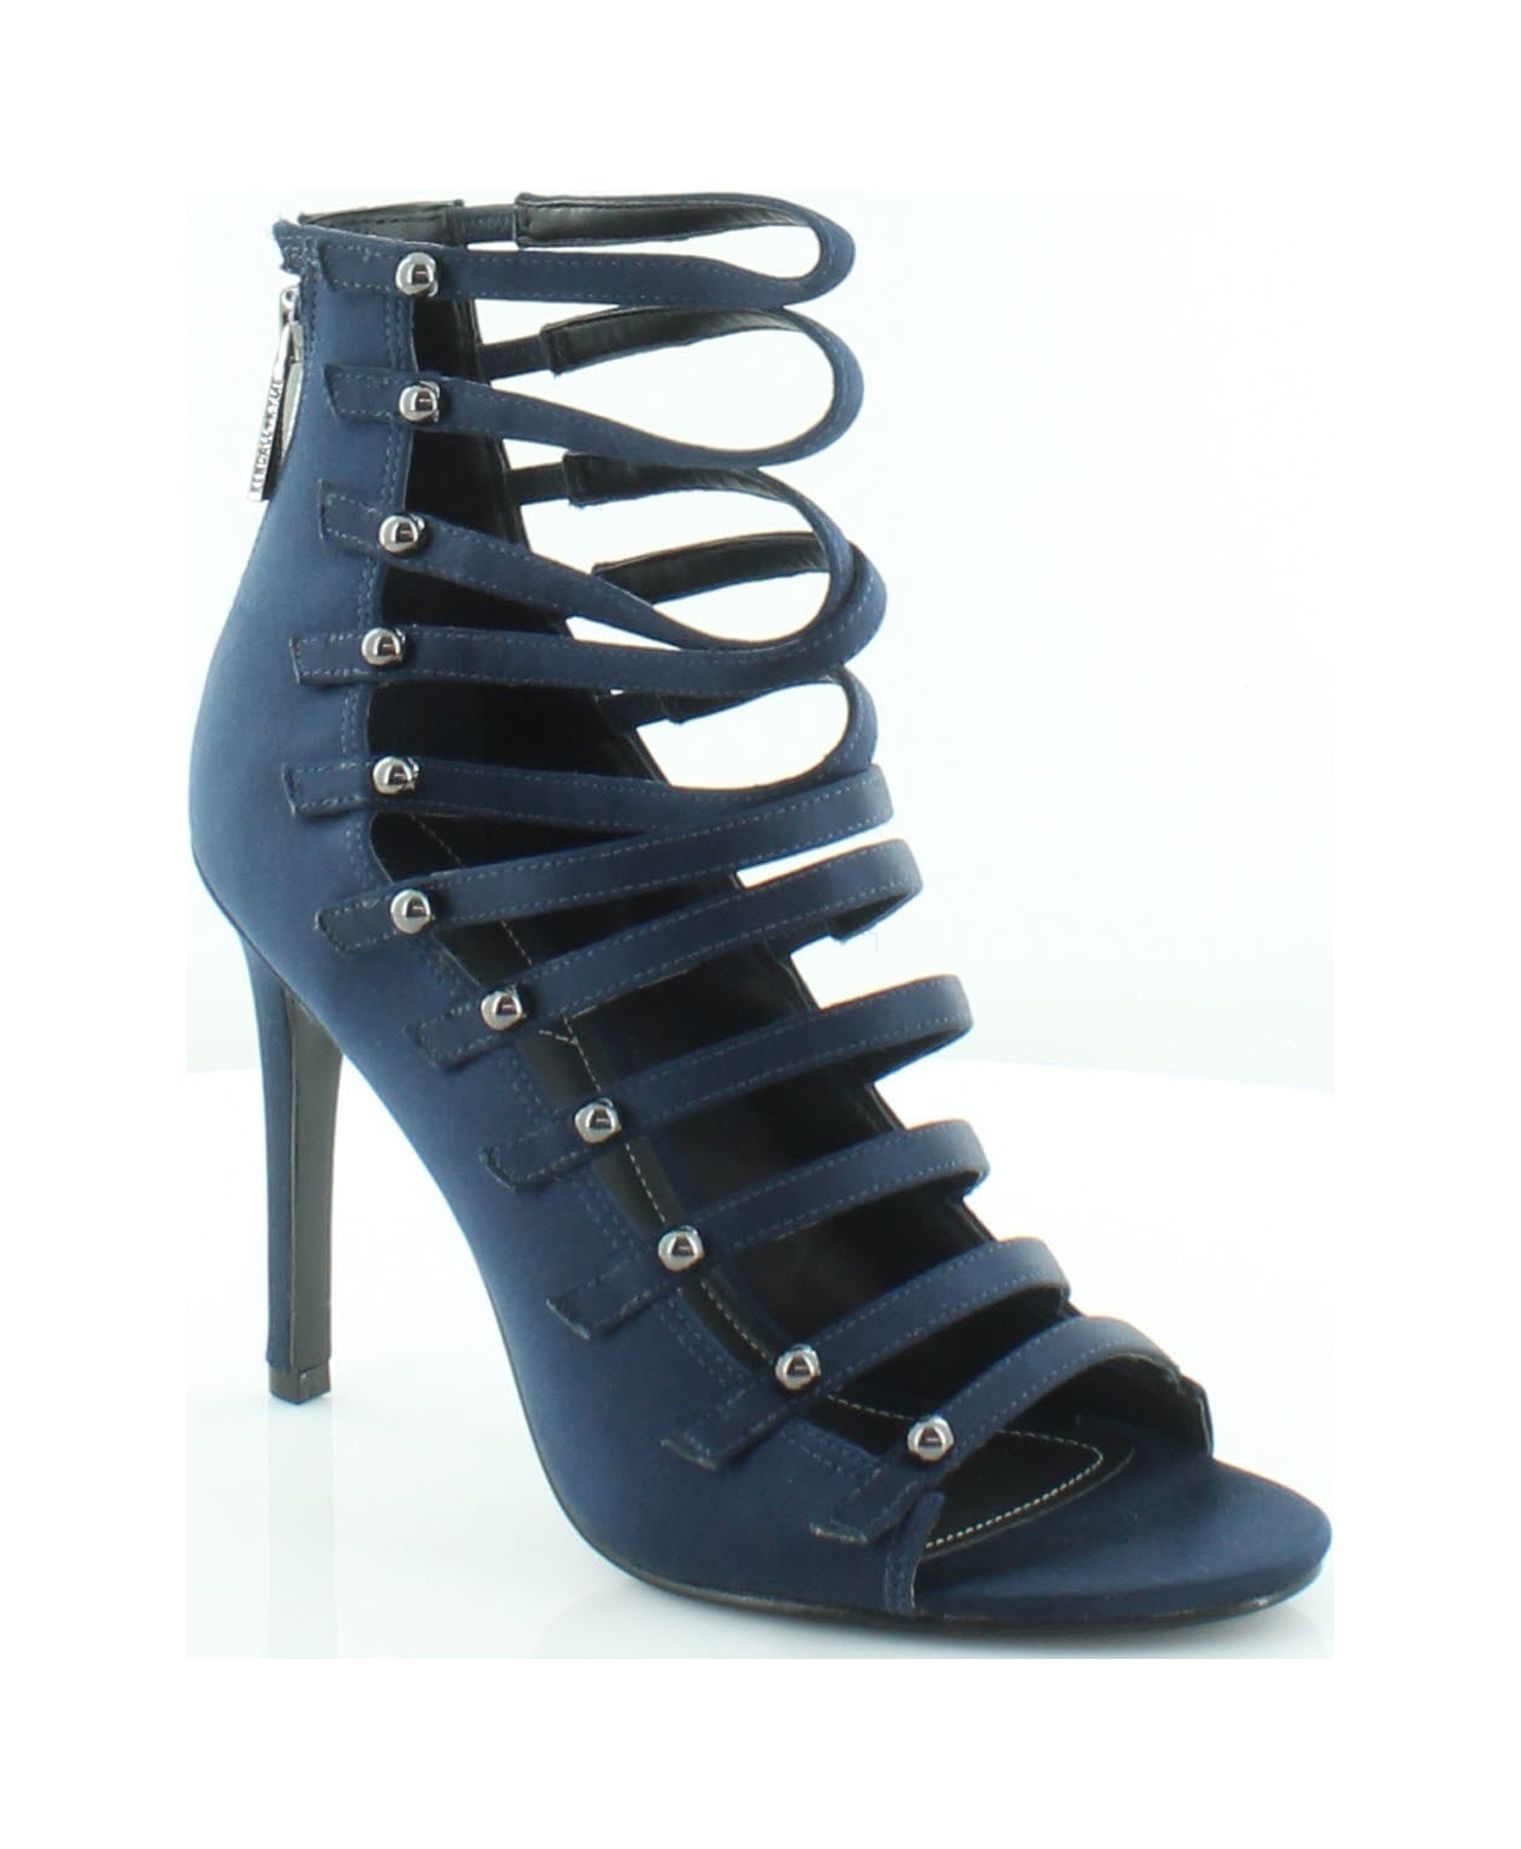 Kendall + Kylie Giaa Women's Heels Dark Blue Size 8.5 M - image 1 of 5